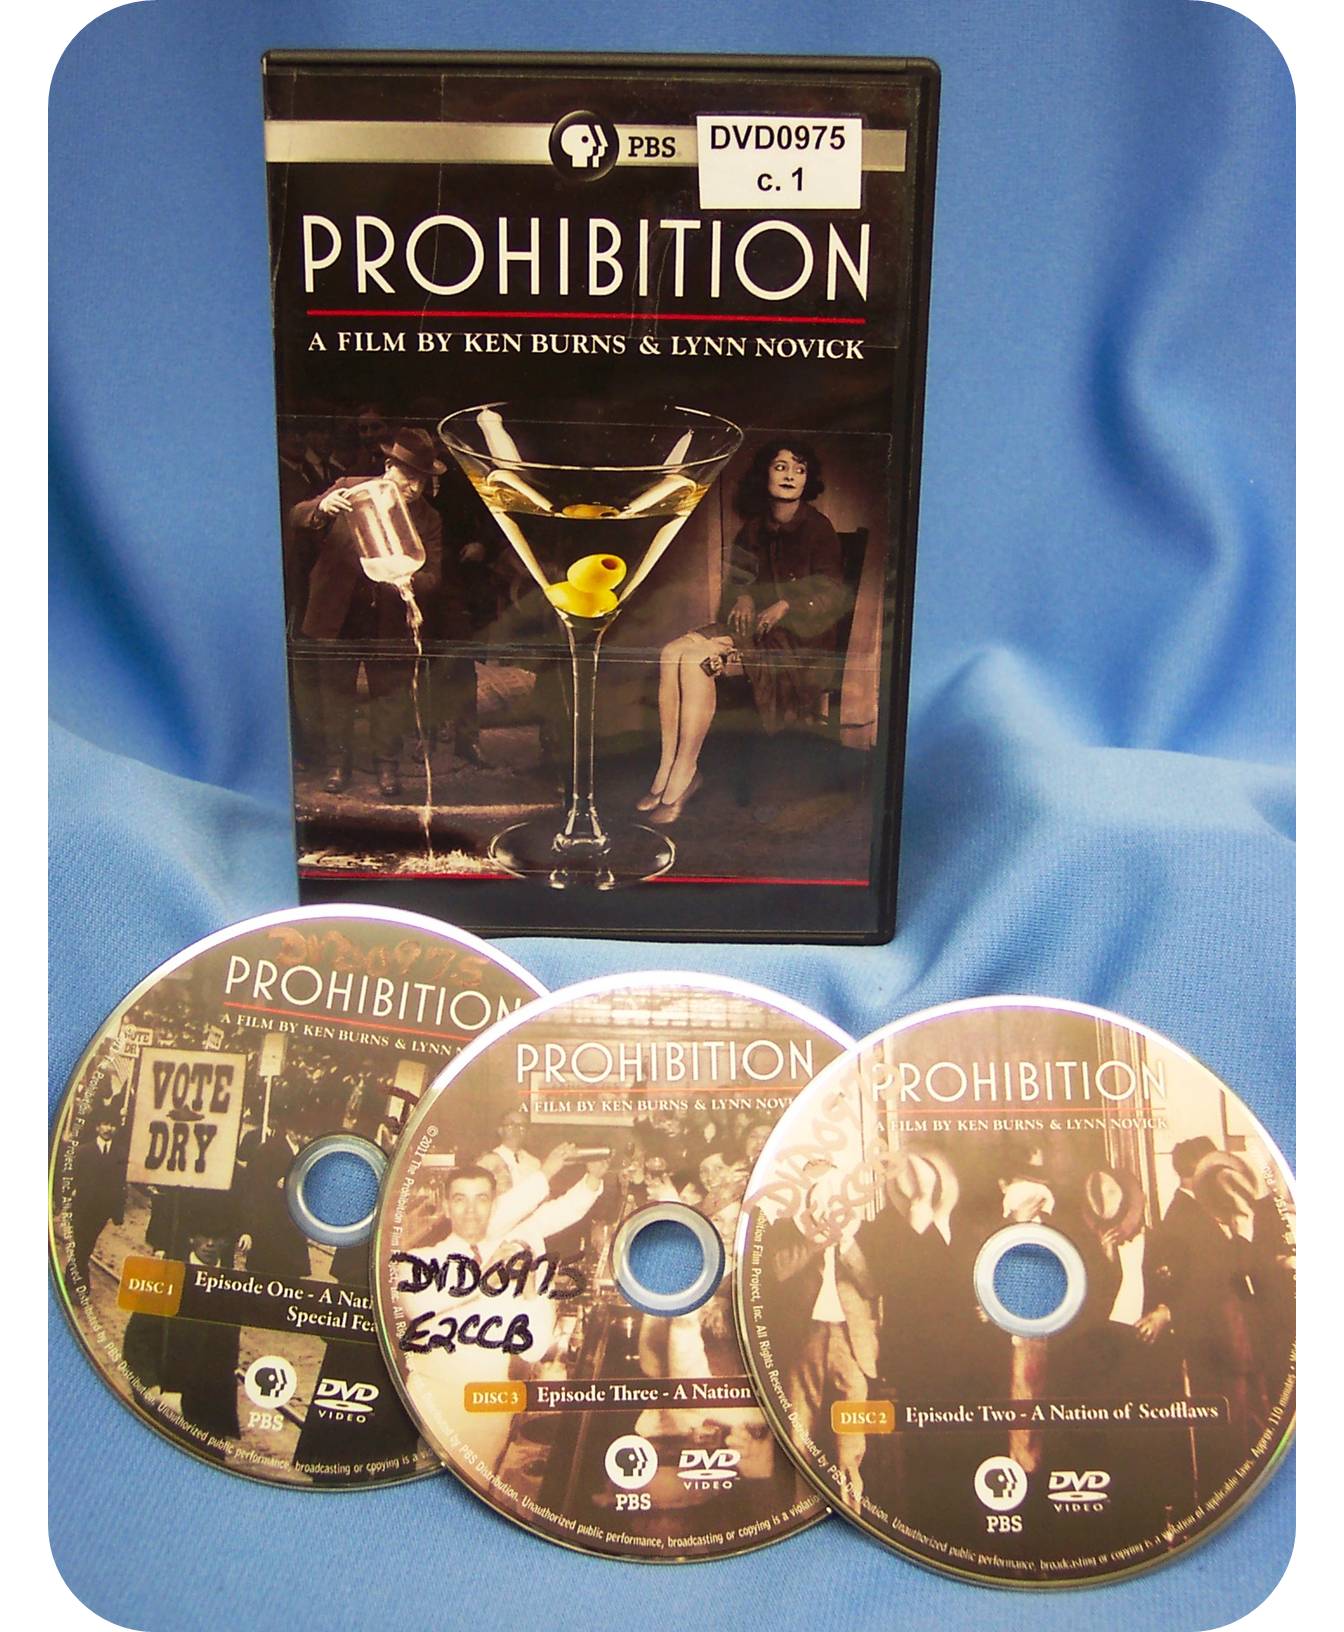 Prohibition by Ken Burns and Lynn Novick